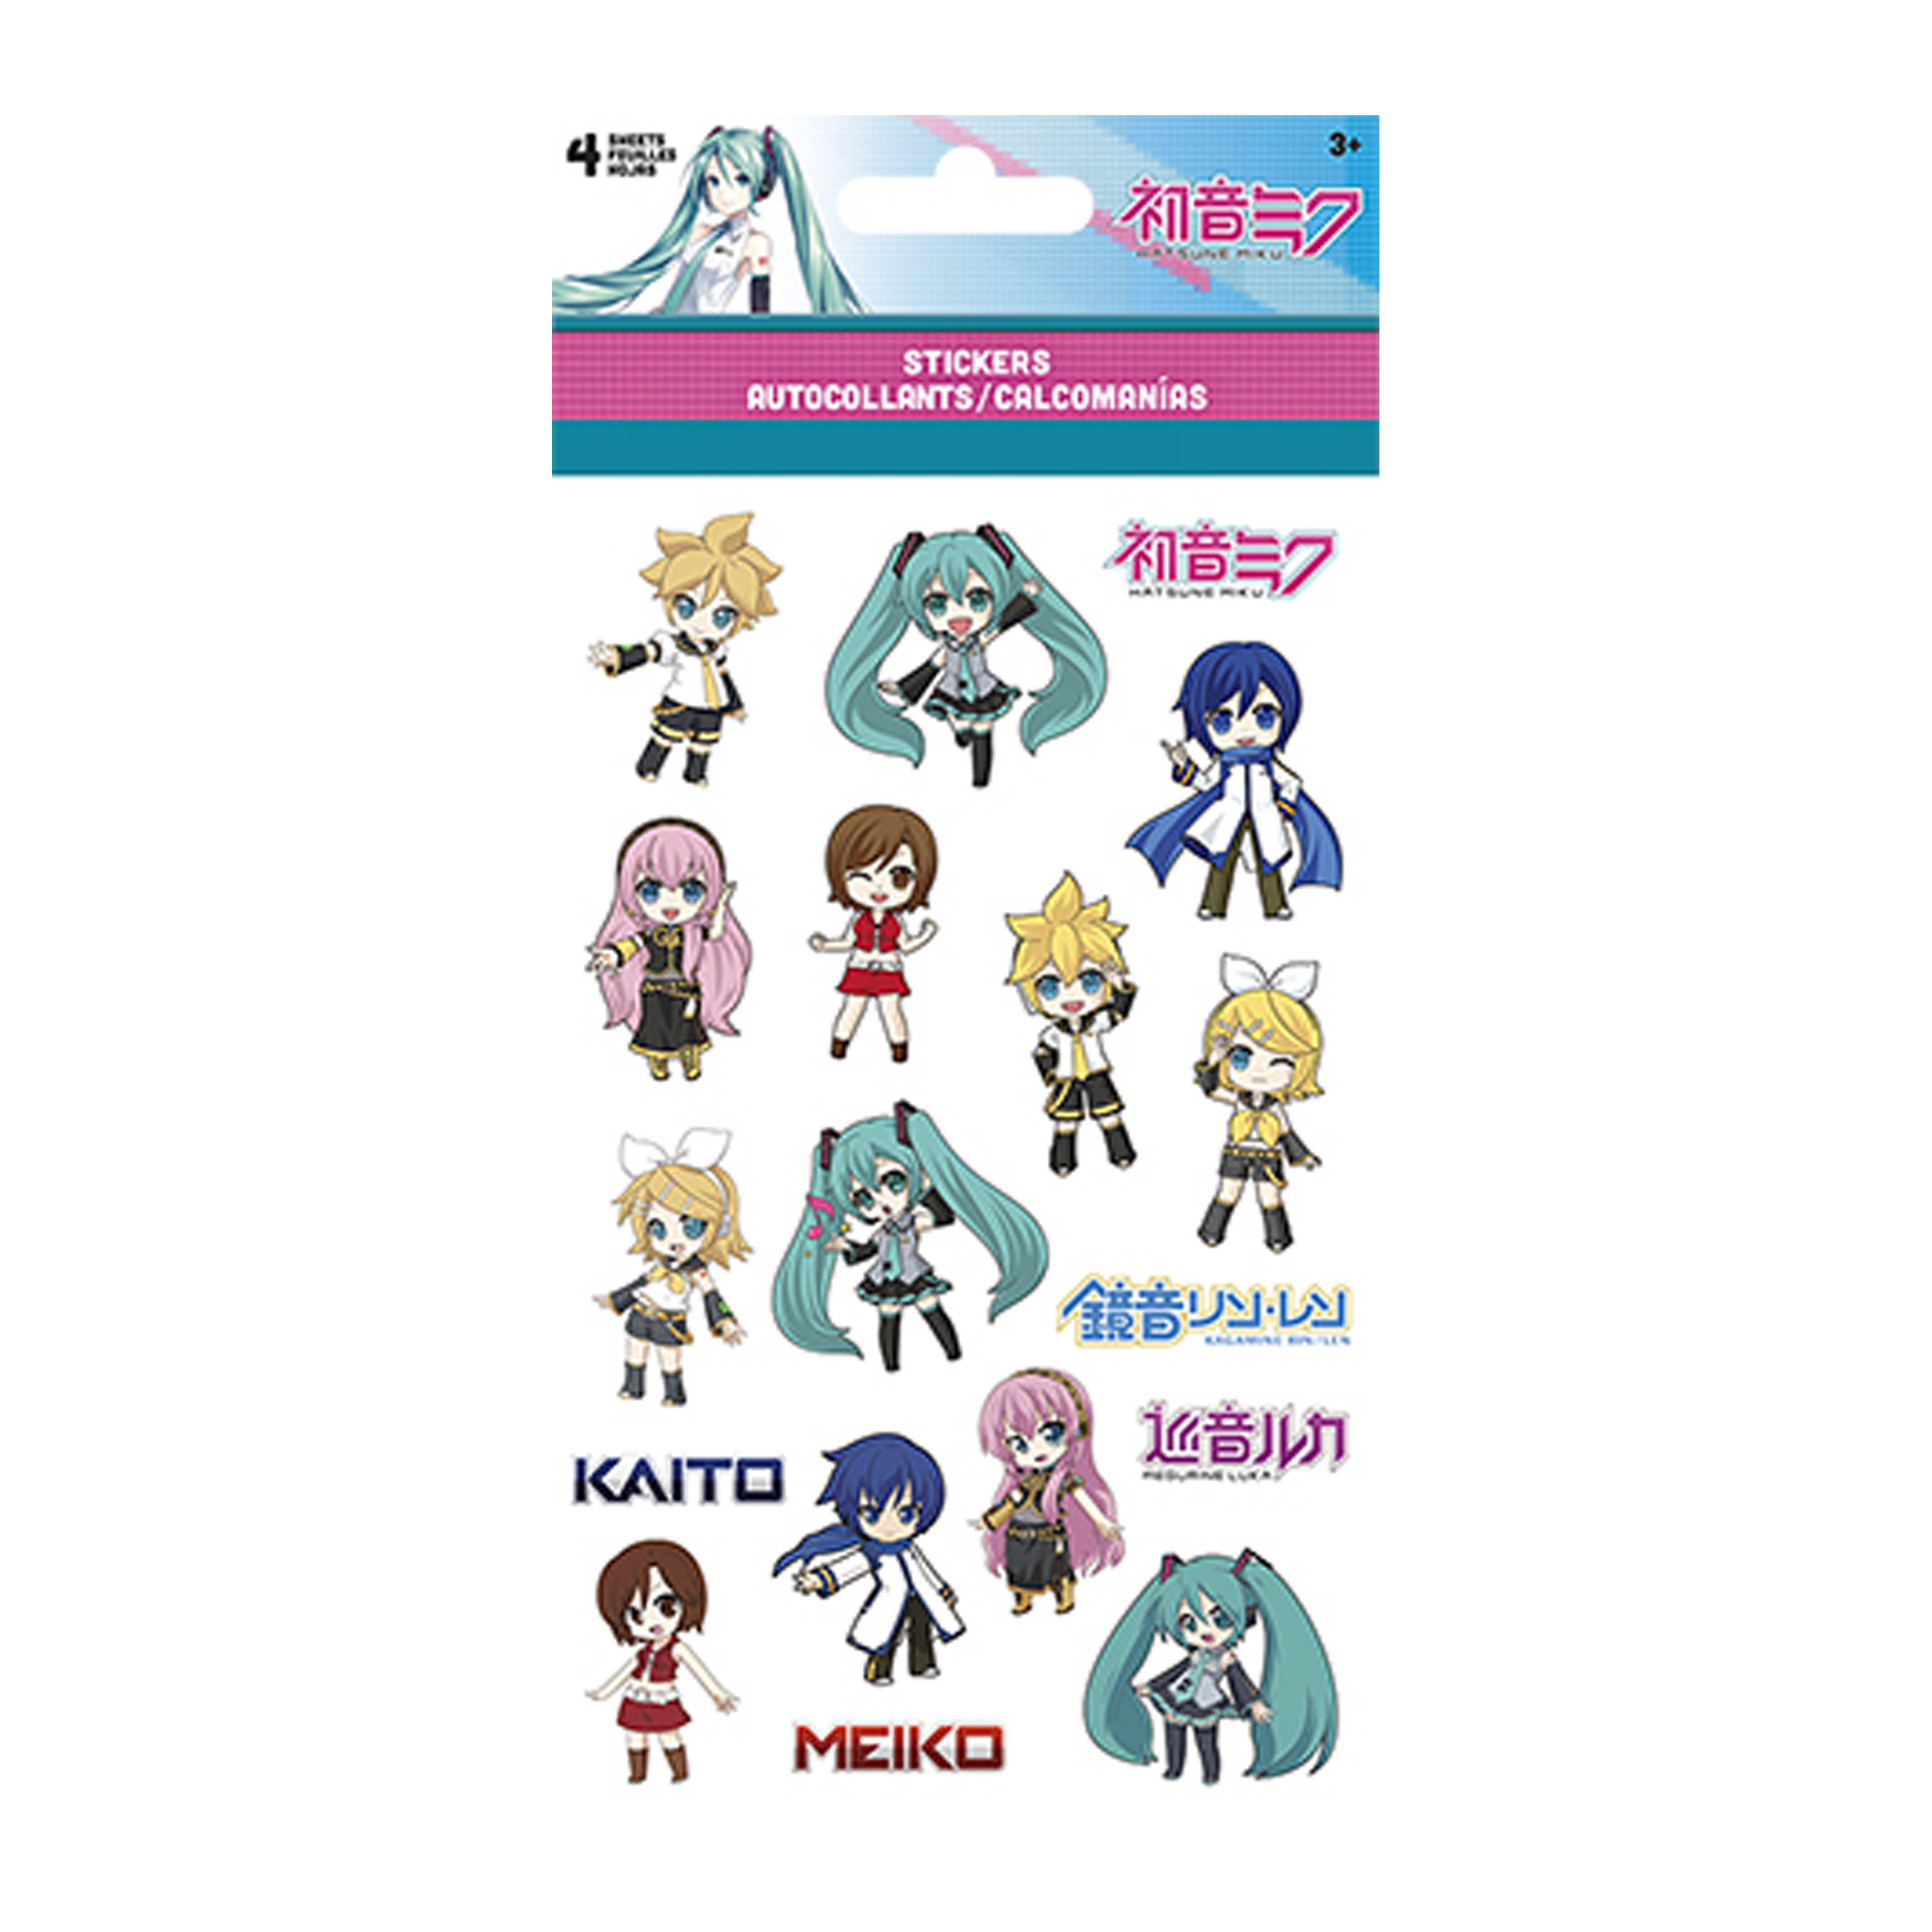 Hatsune Miku™ Stickers 4 Sheets